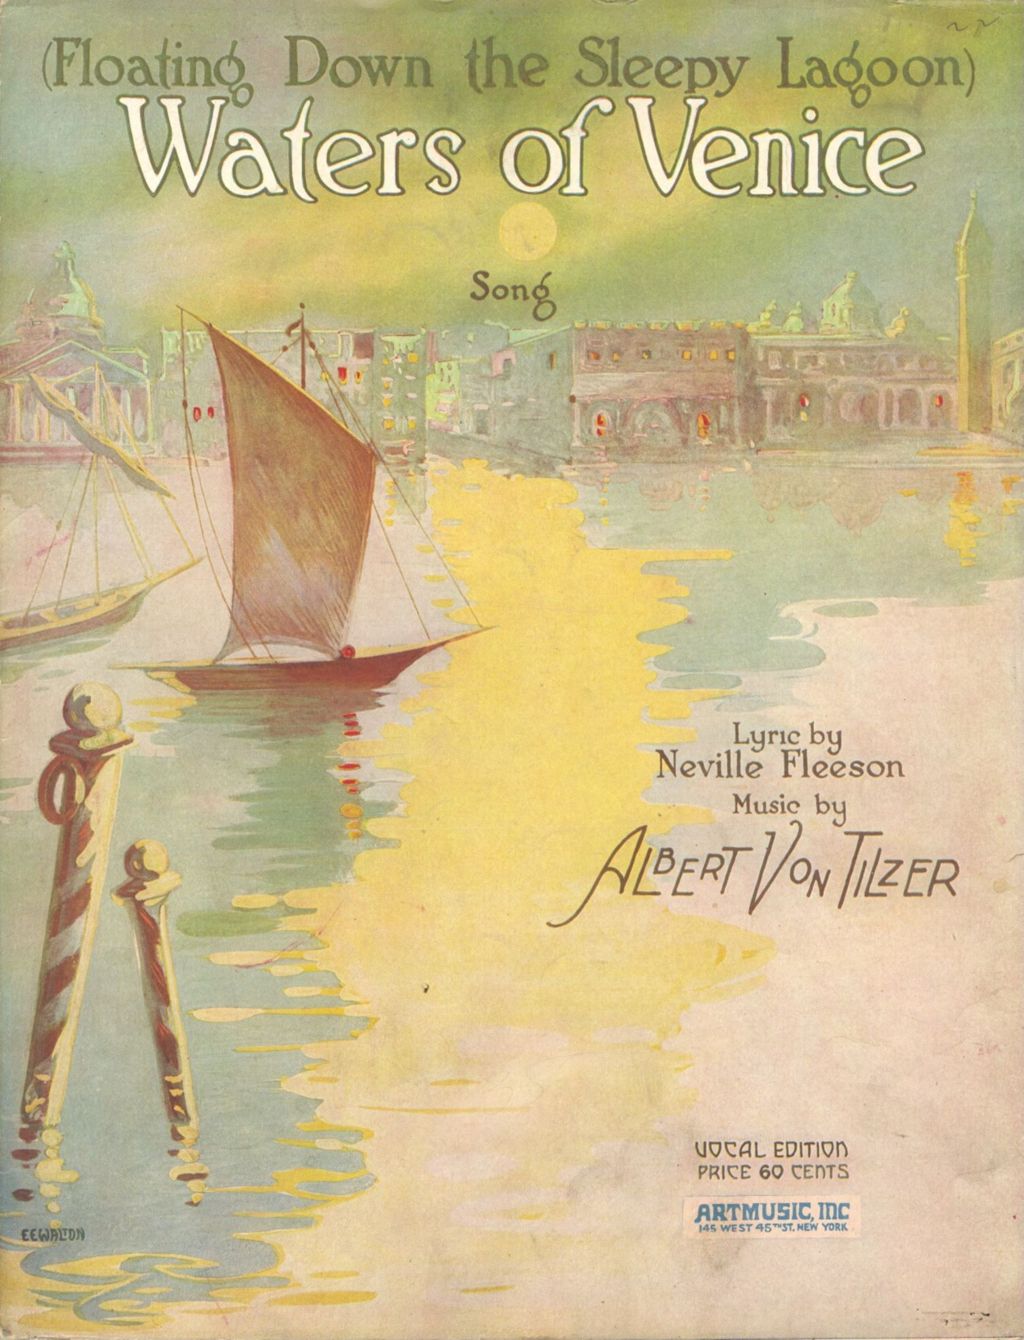 Miniature of Waters of Venice (Floating Down the Sleepy Lagoon)